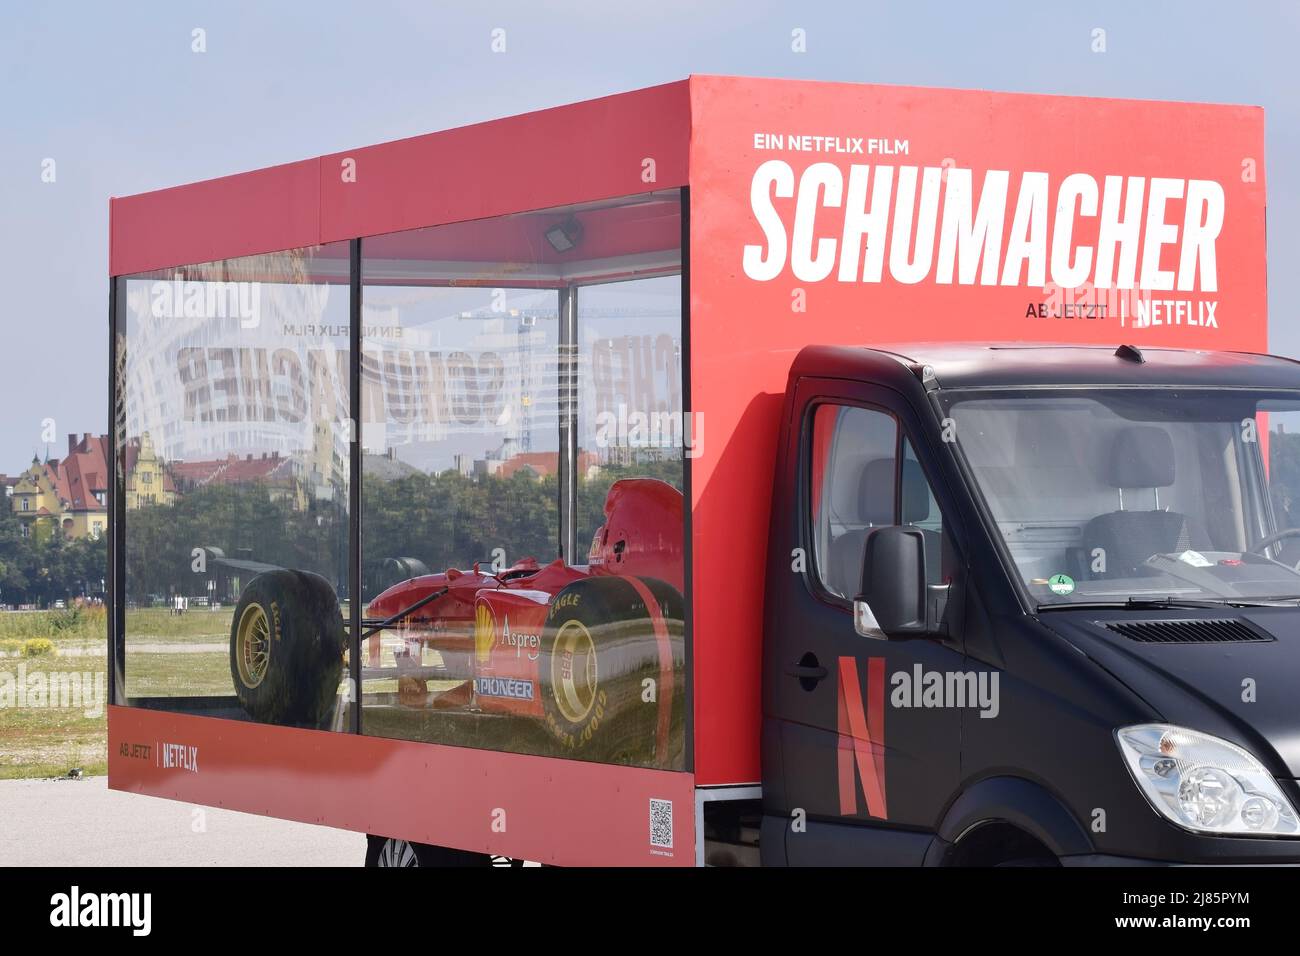 Netflix van with a racing Formula 1 promoting documentary (Netflix film) of Schumacher. Munich, Germany Stock Photo